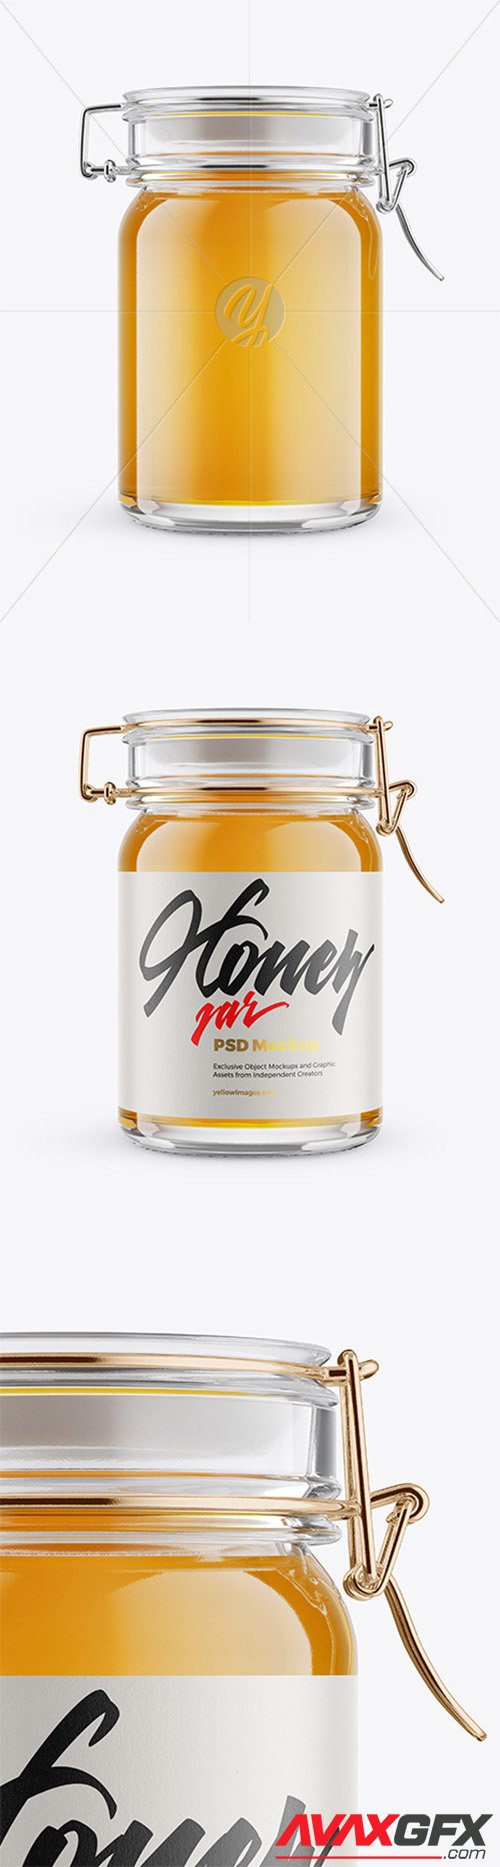 Glass Honey Jar With Clamp Lid Mockup 62655